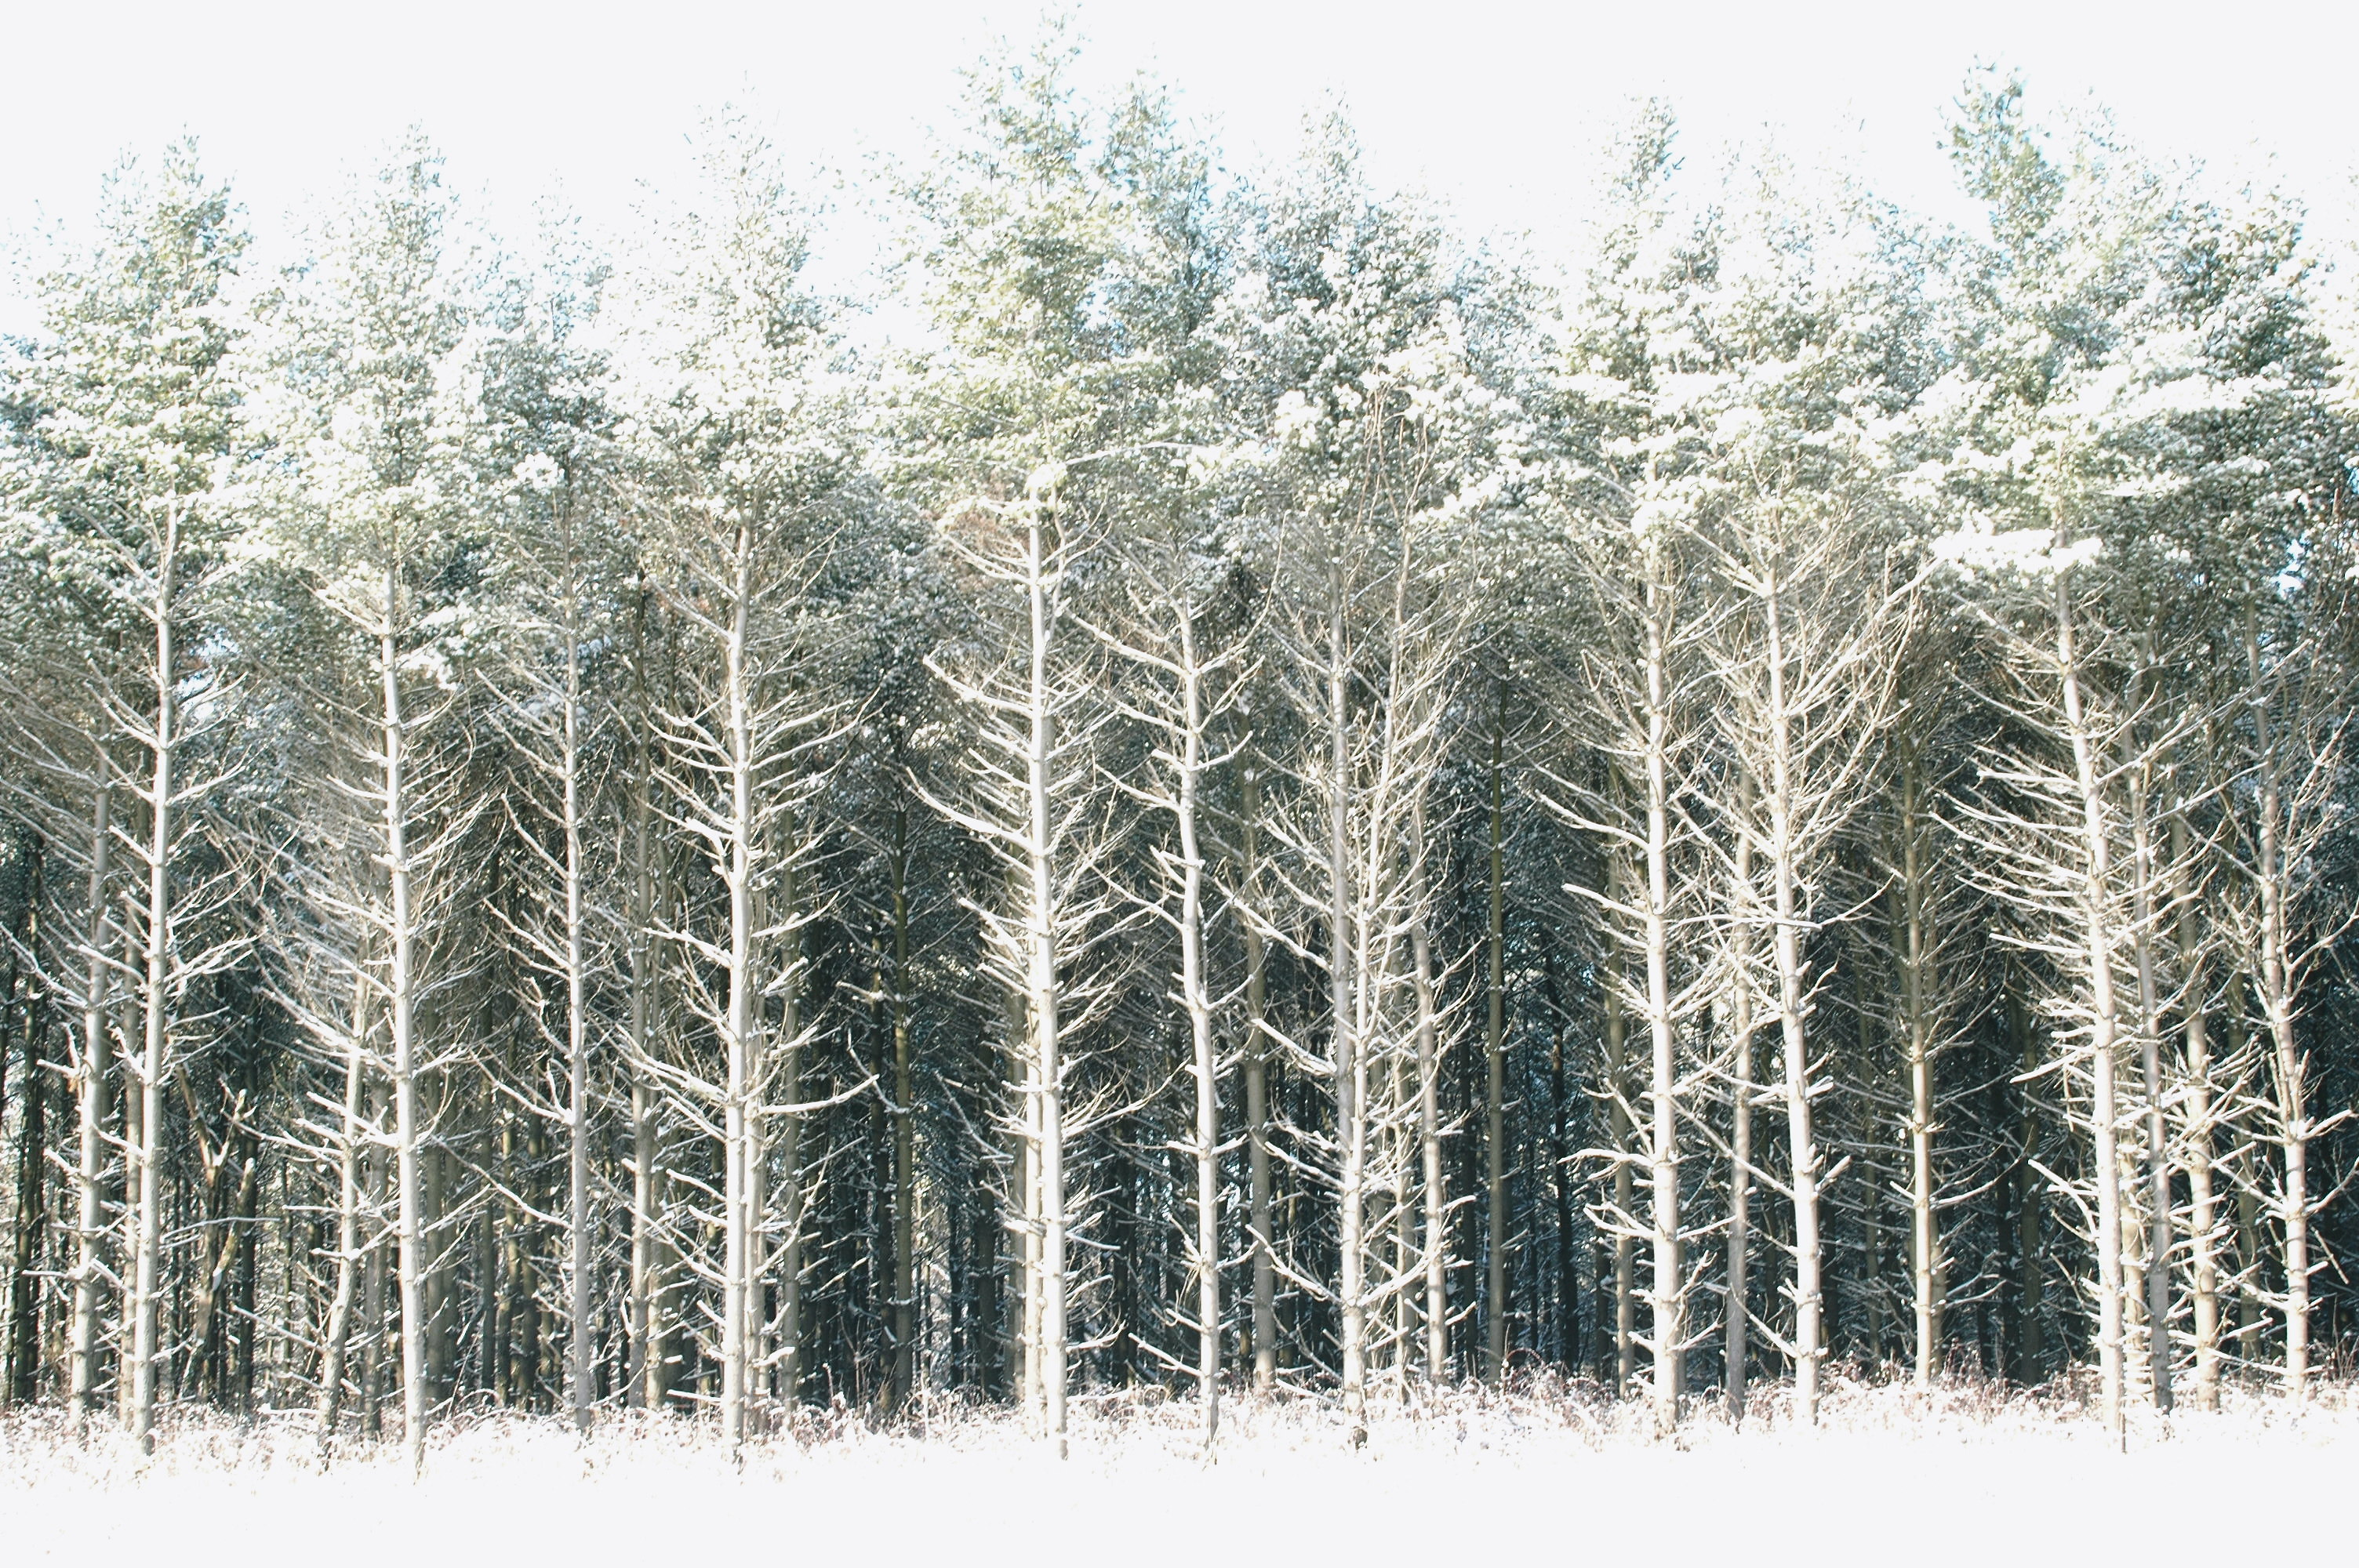 Trees in winter by Doug Stener